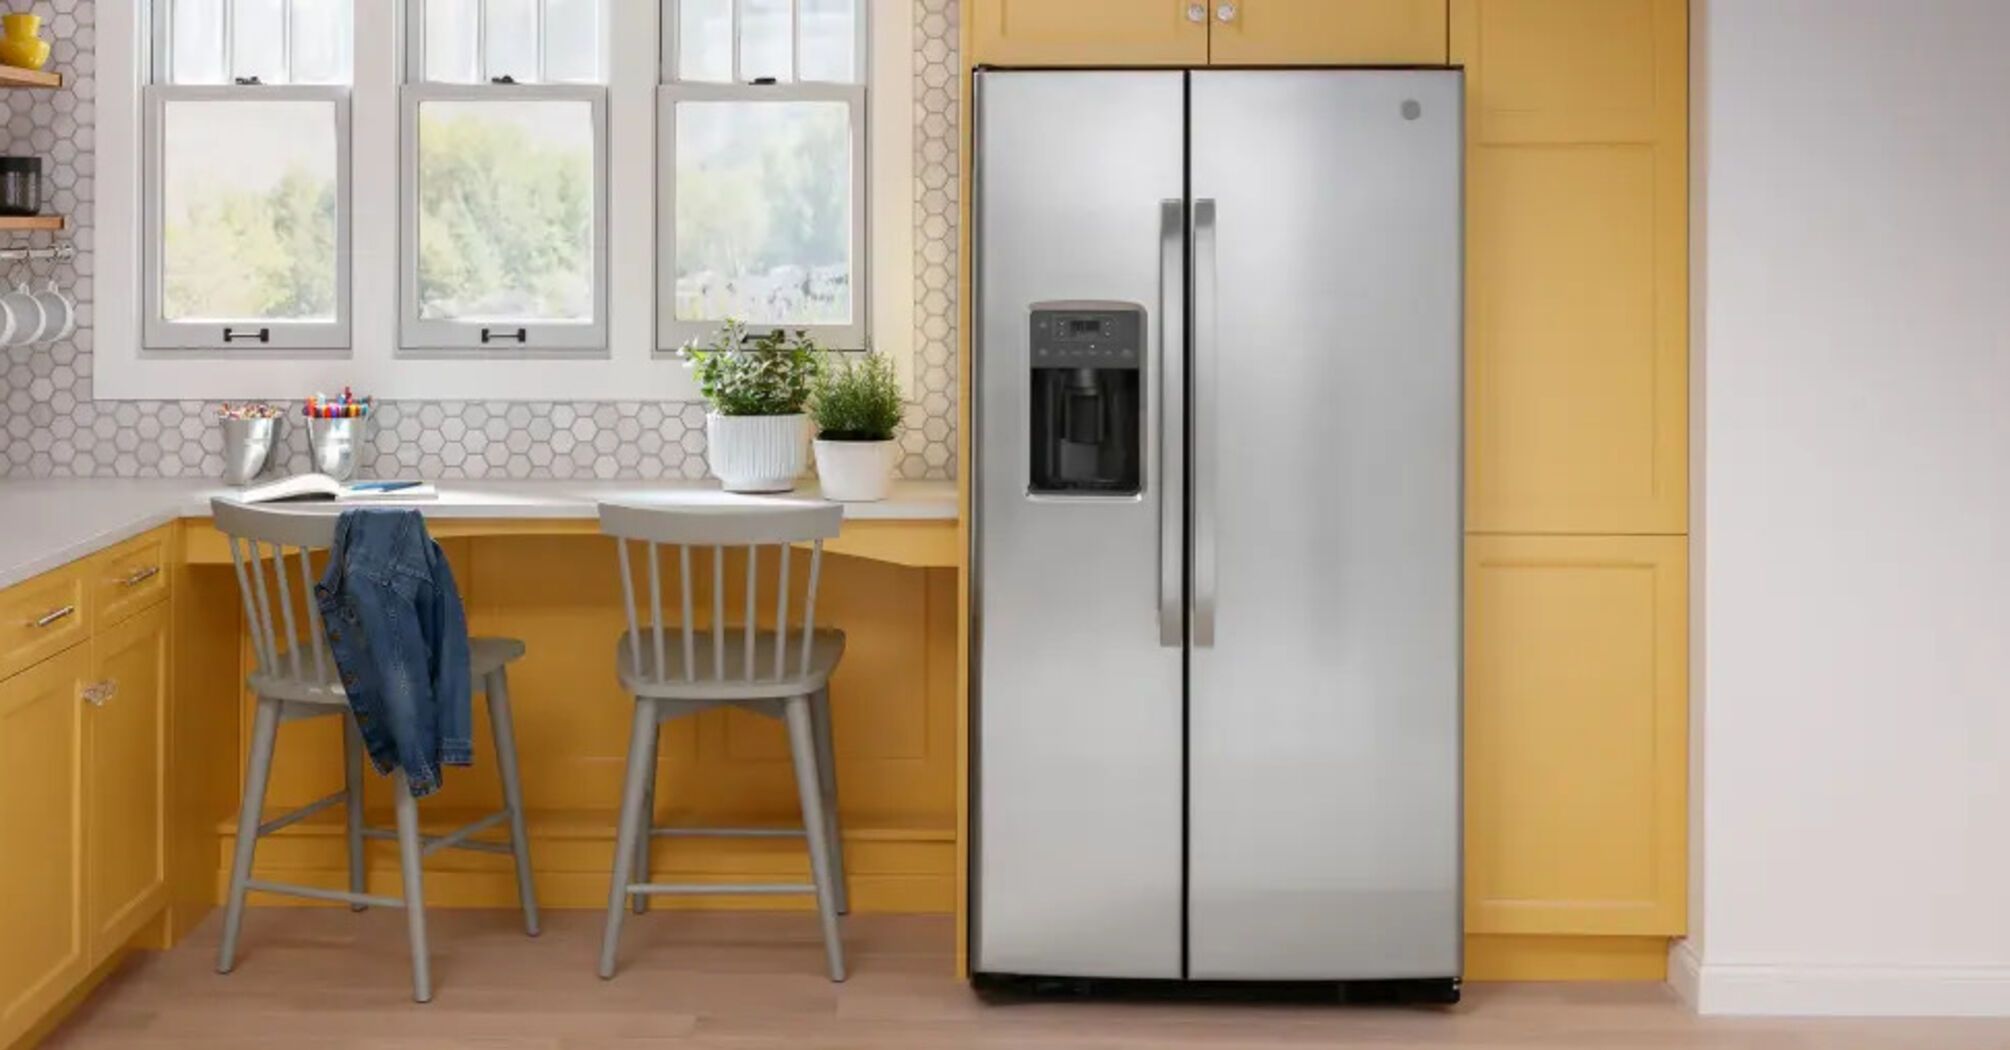 Side-by-Side refrigerators